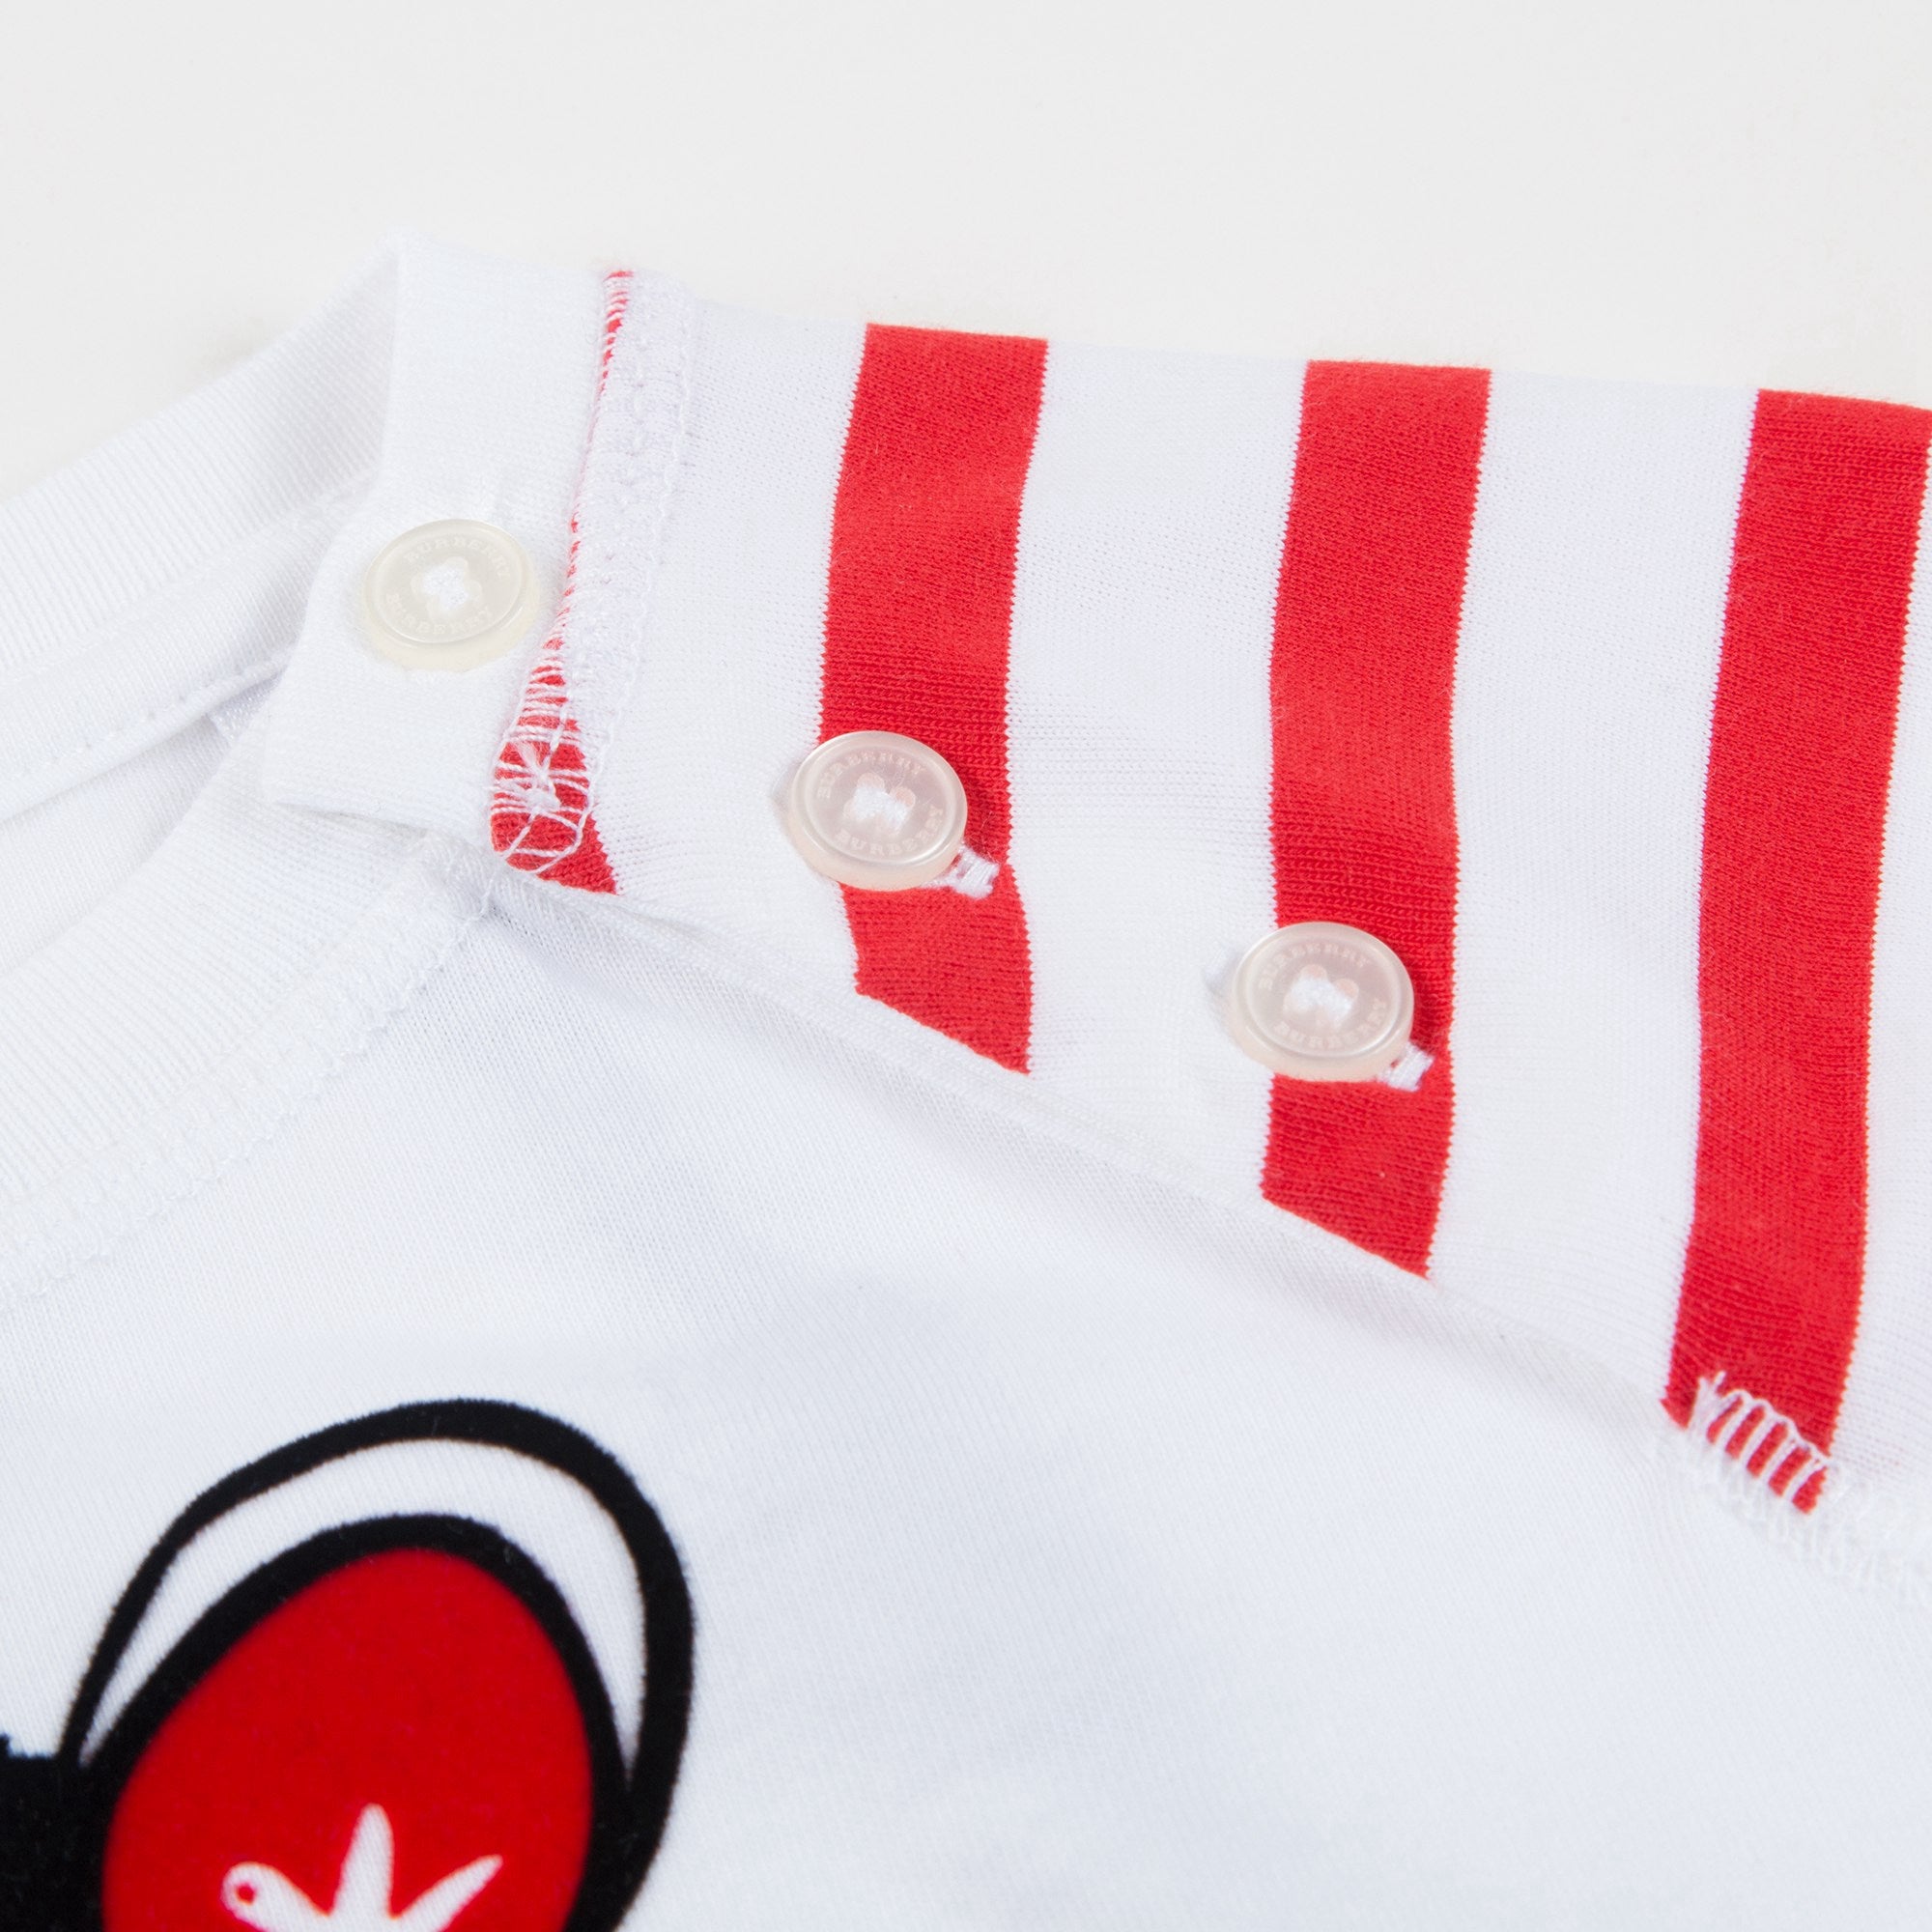 Boys White Stripe Embroidery Long Sleeve